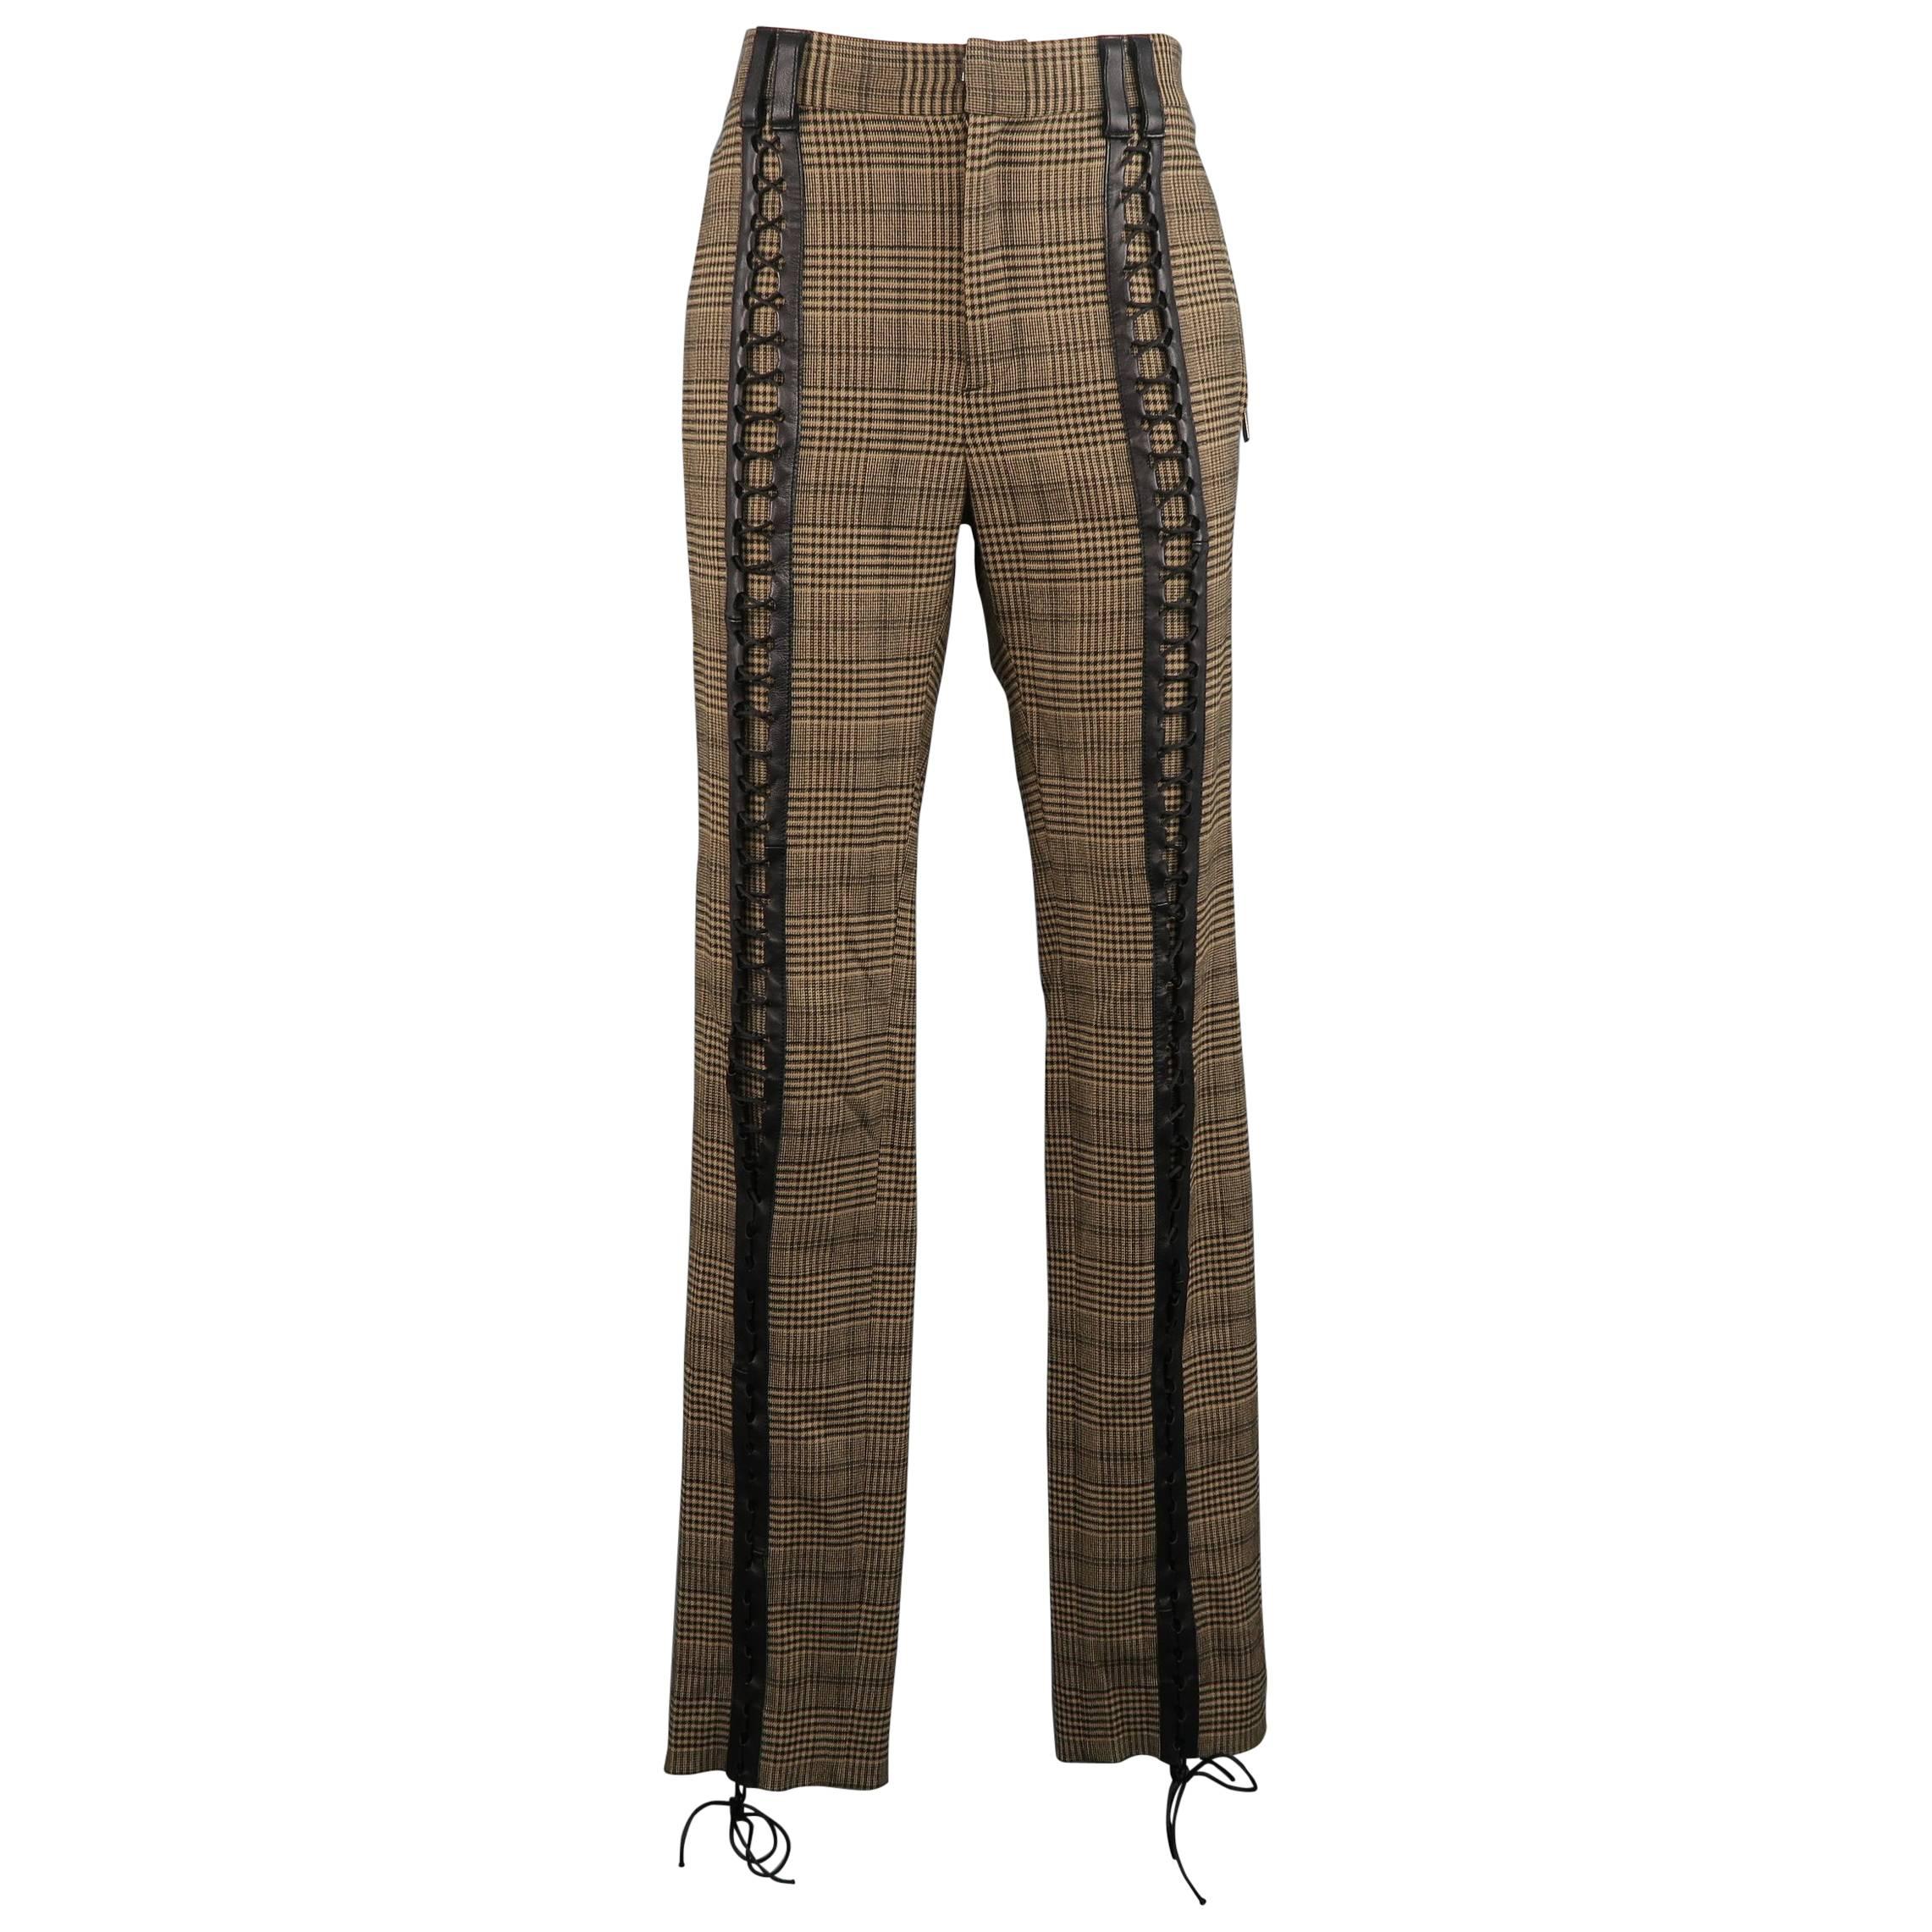 JEAN PAUL GAULTIER Size 30 Tan Glenplaid Wool Blend Leather Lace Up Pants